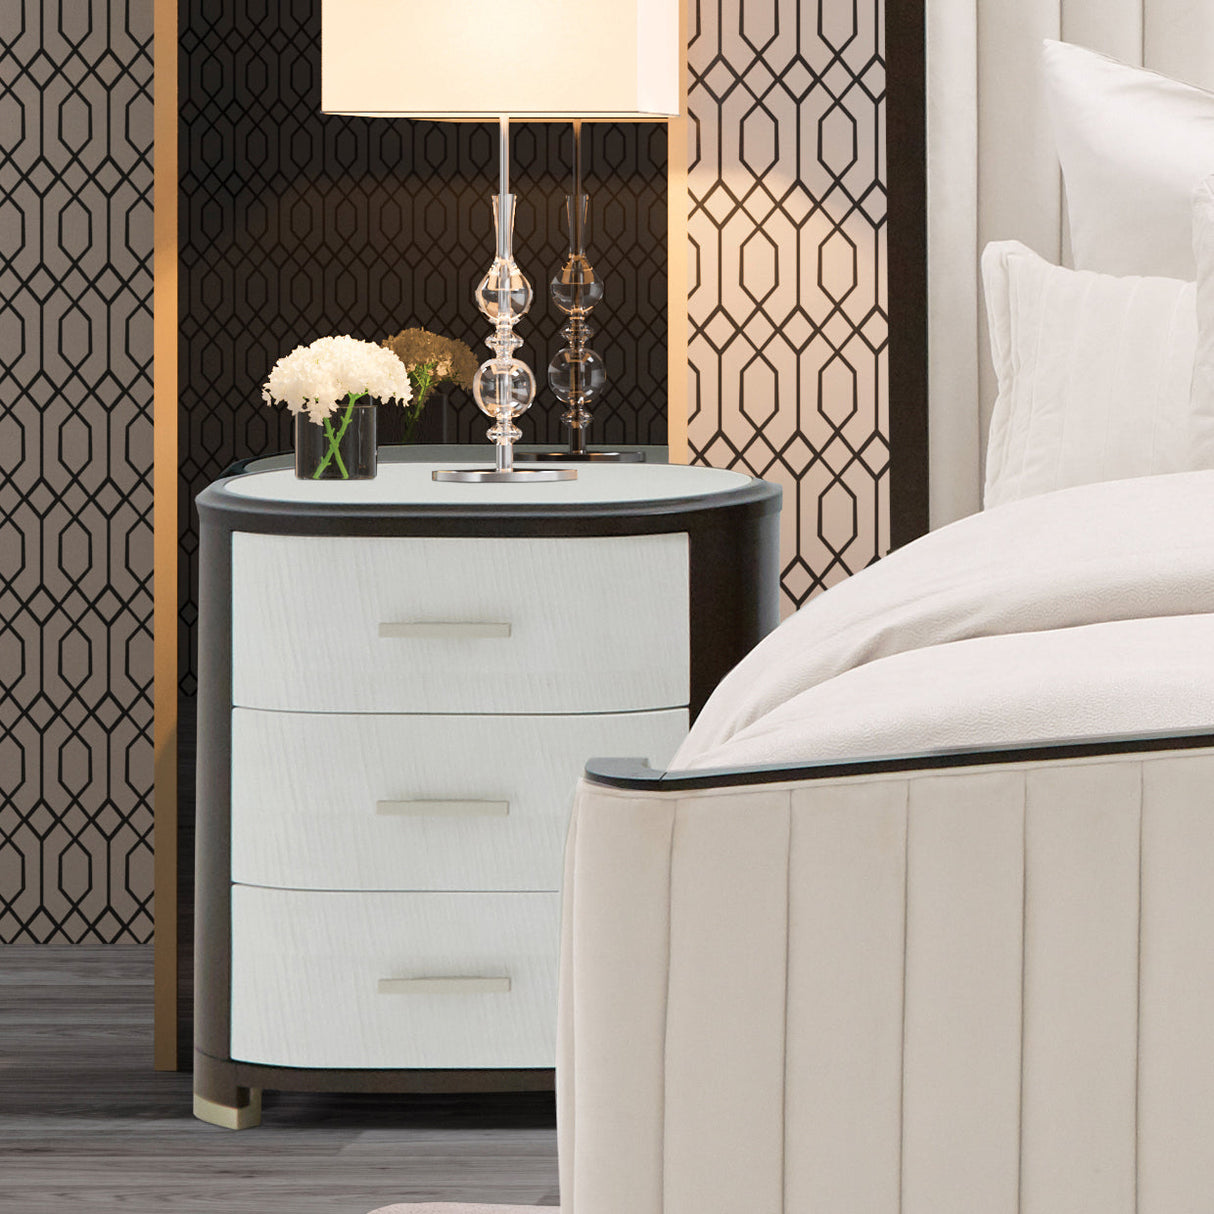 Aico Furniture - Paris Chic 5 Piece Queen Tufted Sleigh Bedroom Set In Espresso - N9003000Qns4-409-5Set